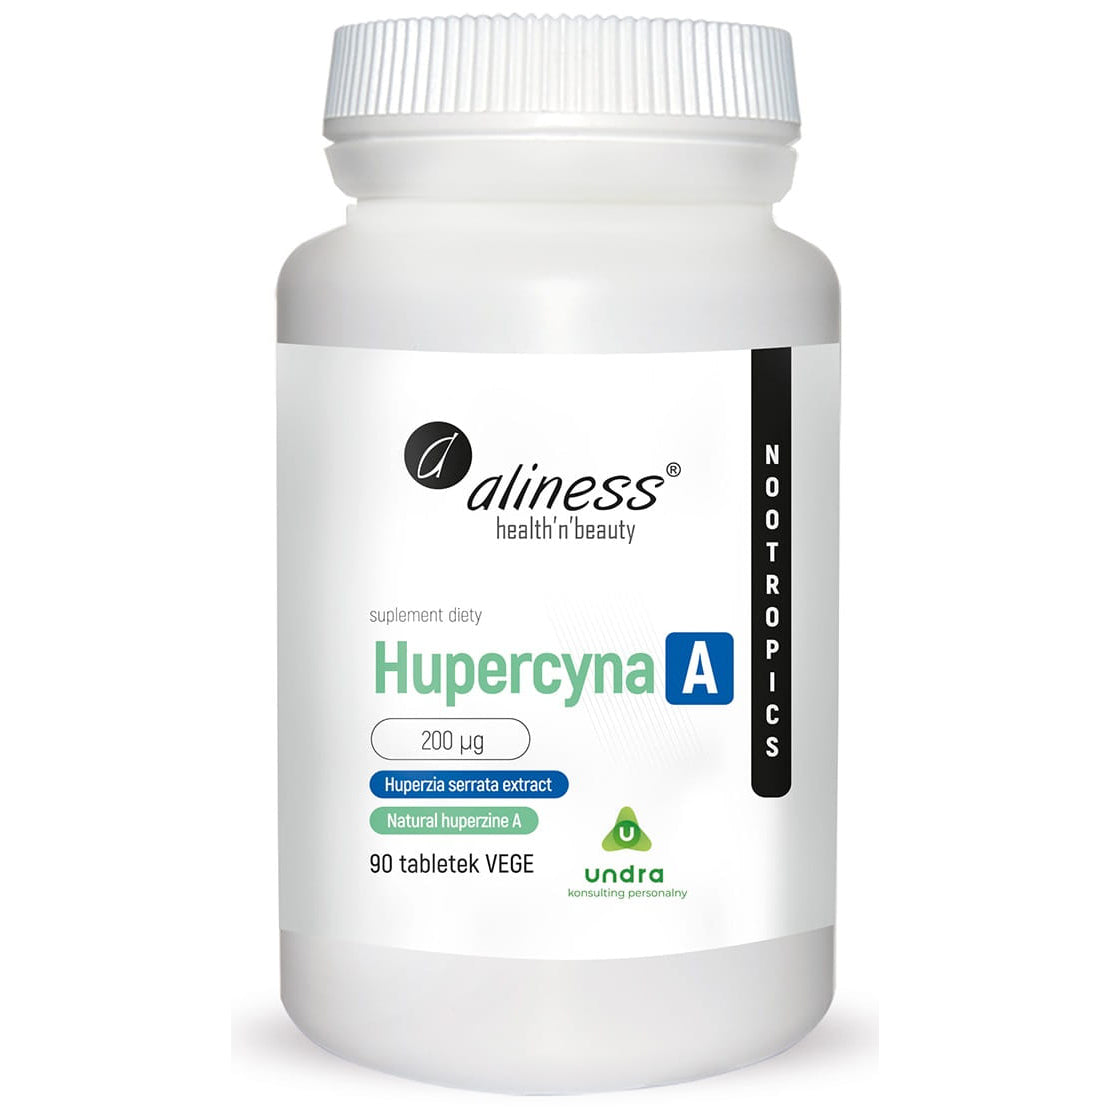 Aliness Hupercyna A 200µg, 90 tabletek wegańskich 